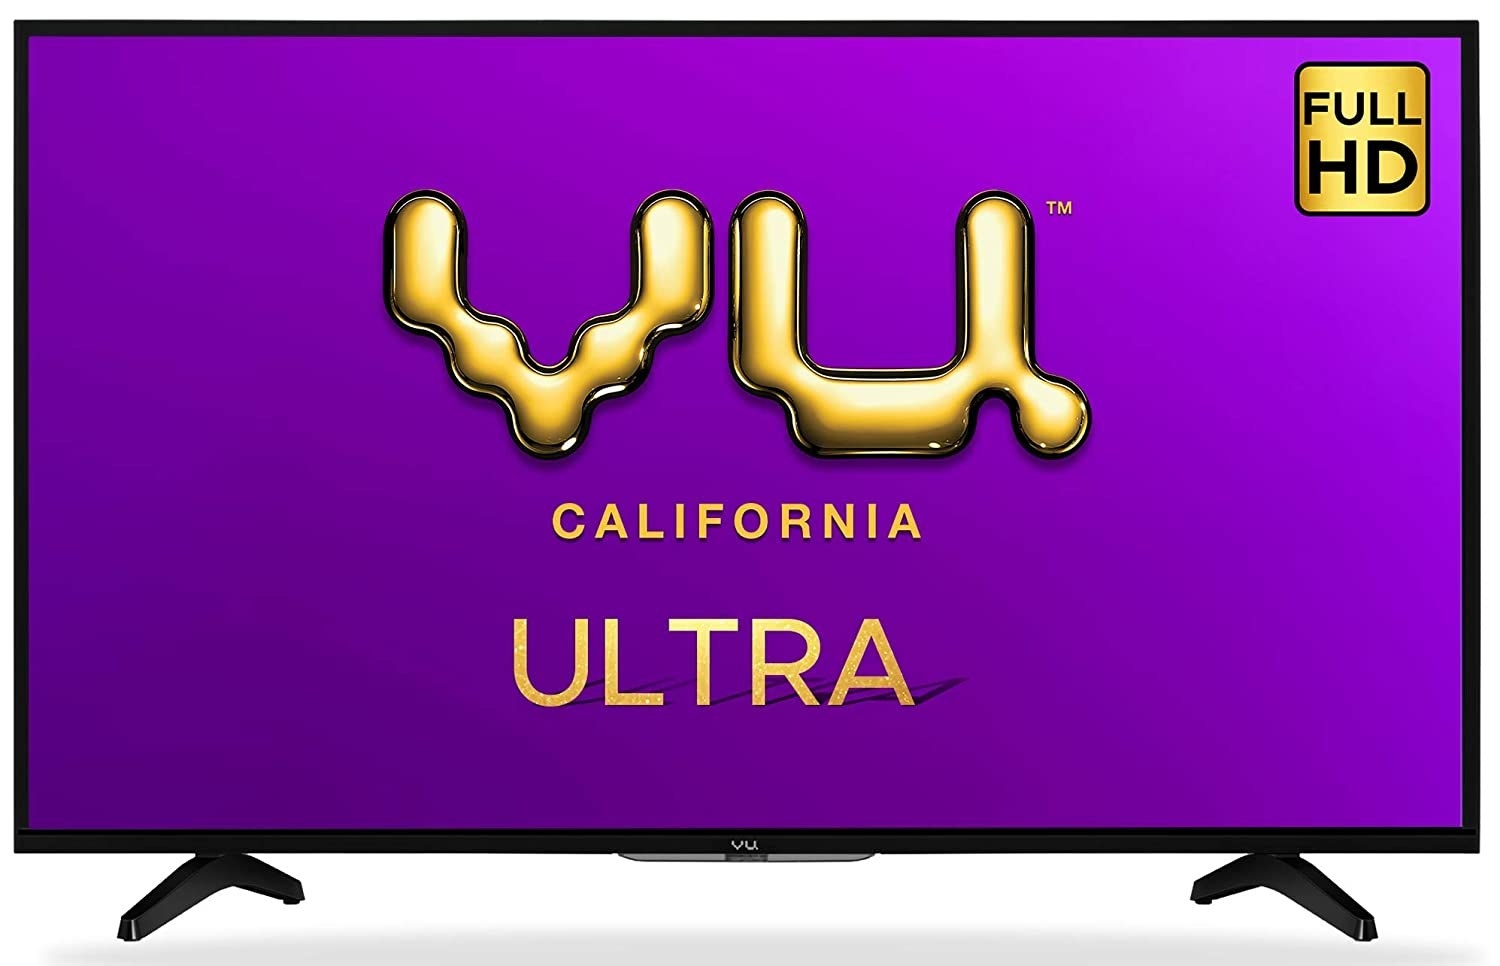 Purple loading screen with the VU logo